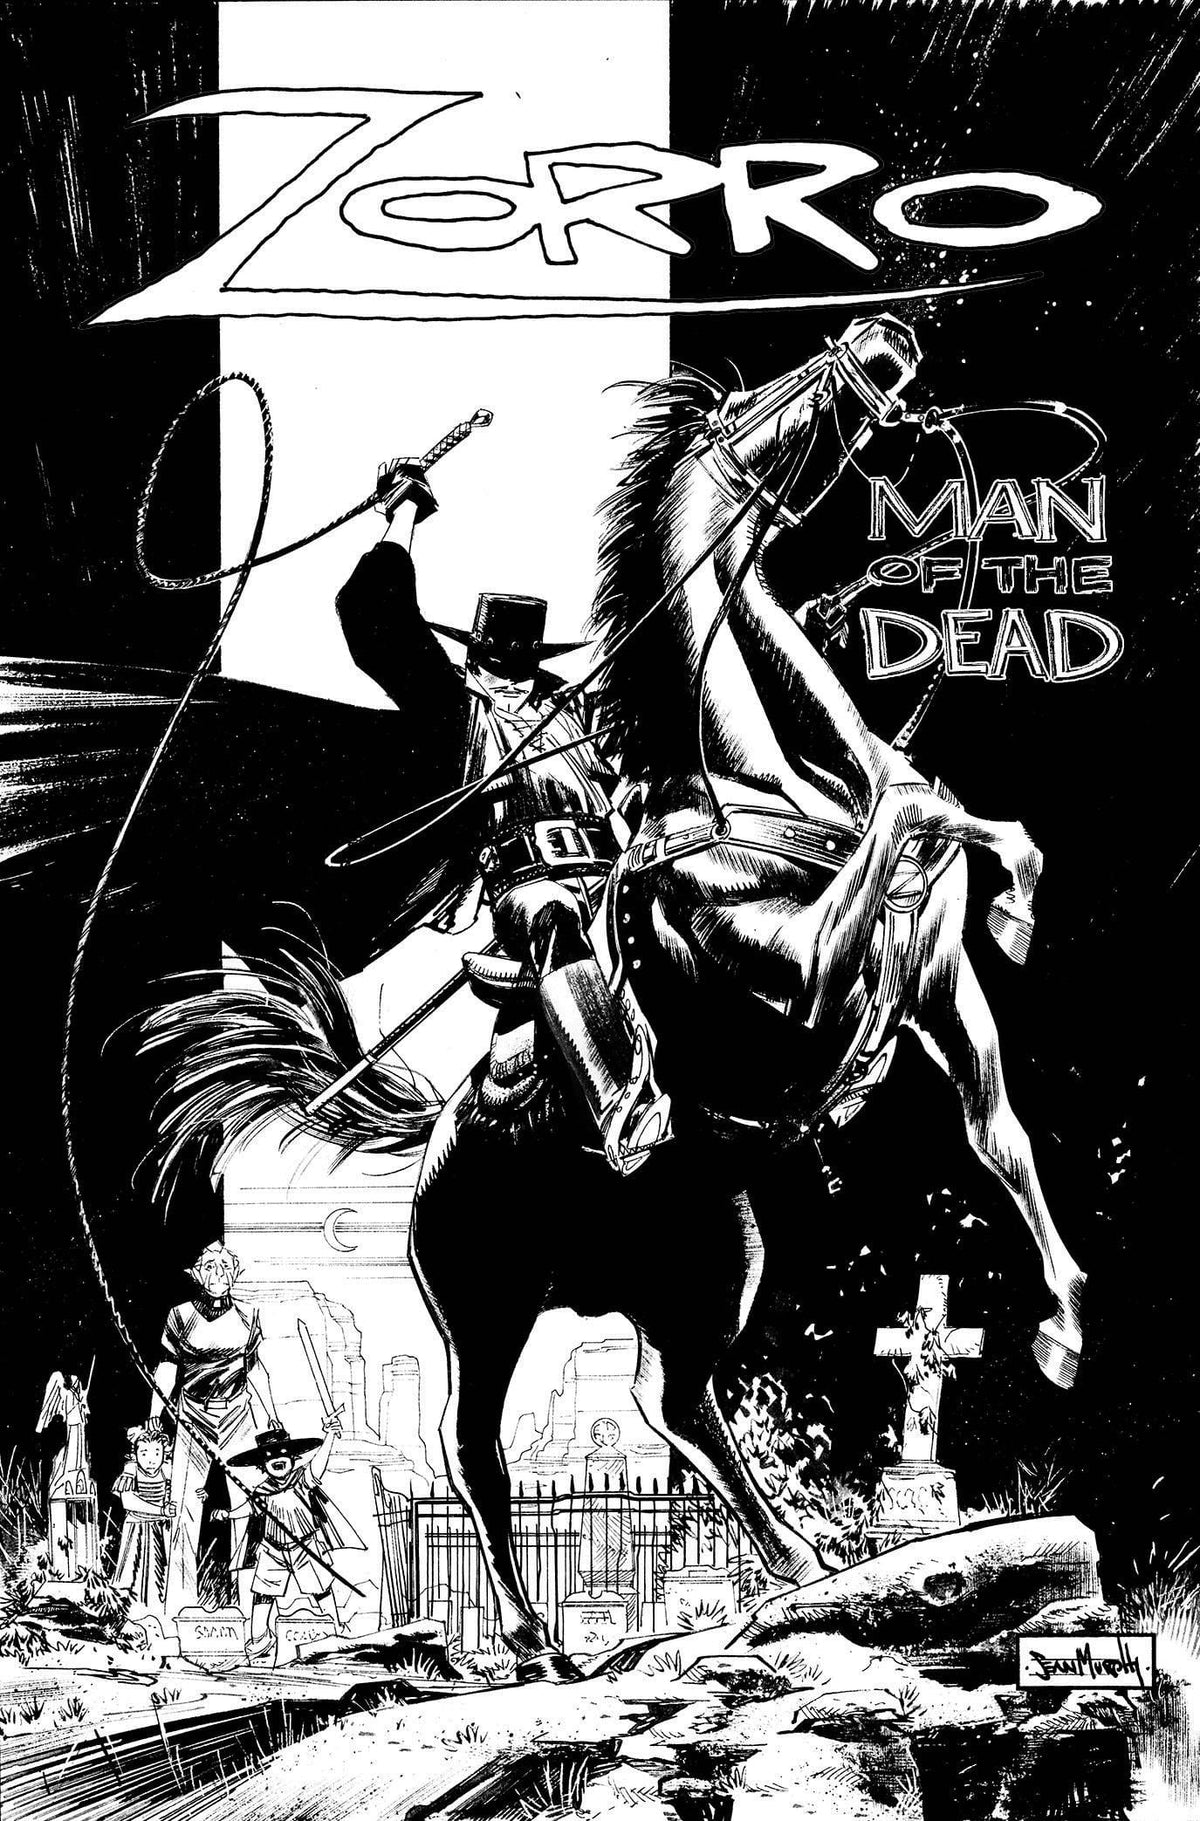 ZORRO MAN OF THE DEAD #1 (OF 4) CVR H 1:50 INCV BW MURPHYIMAGE COVER